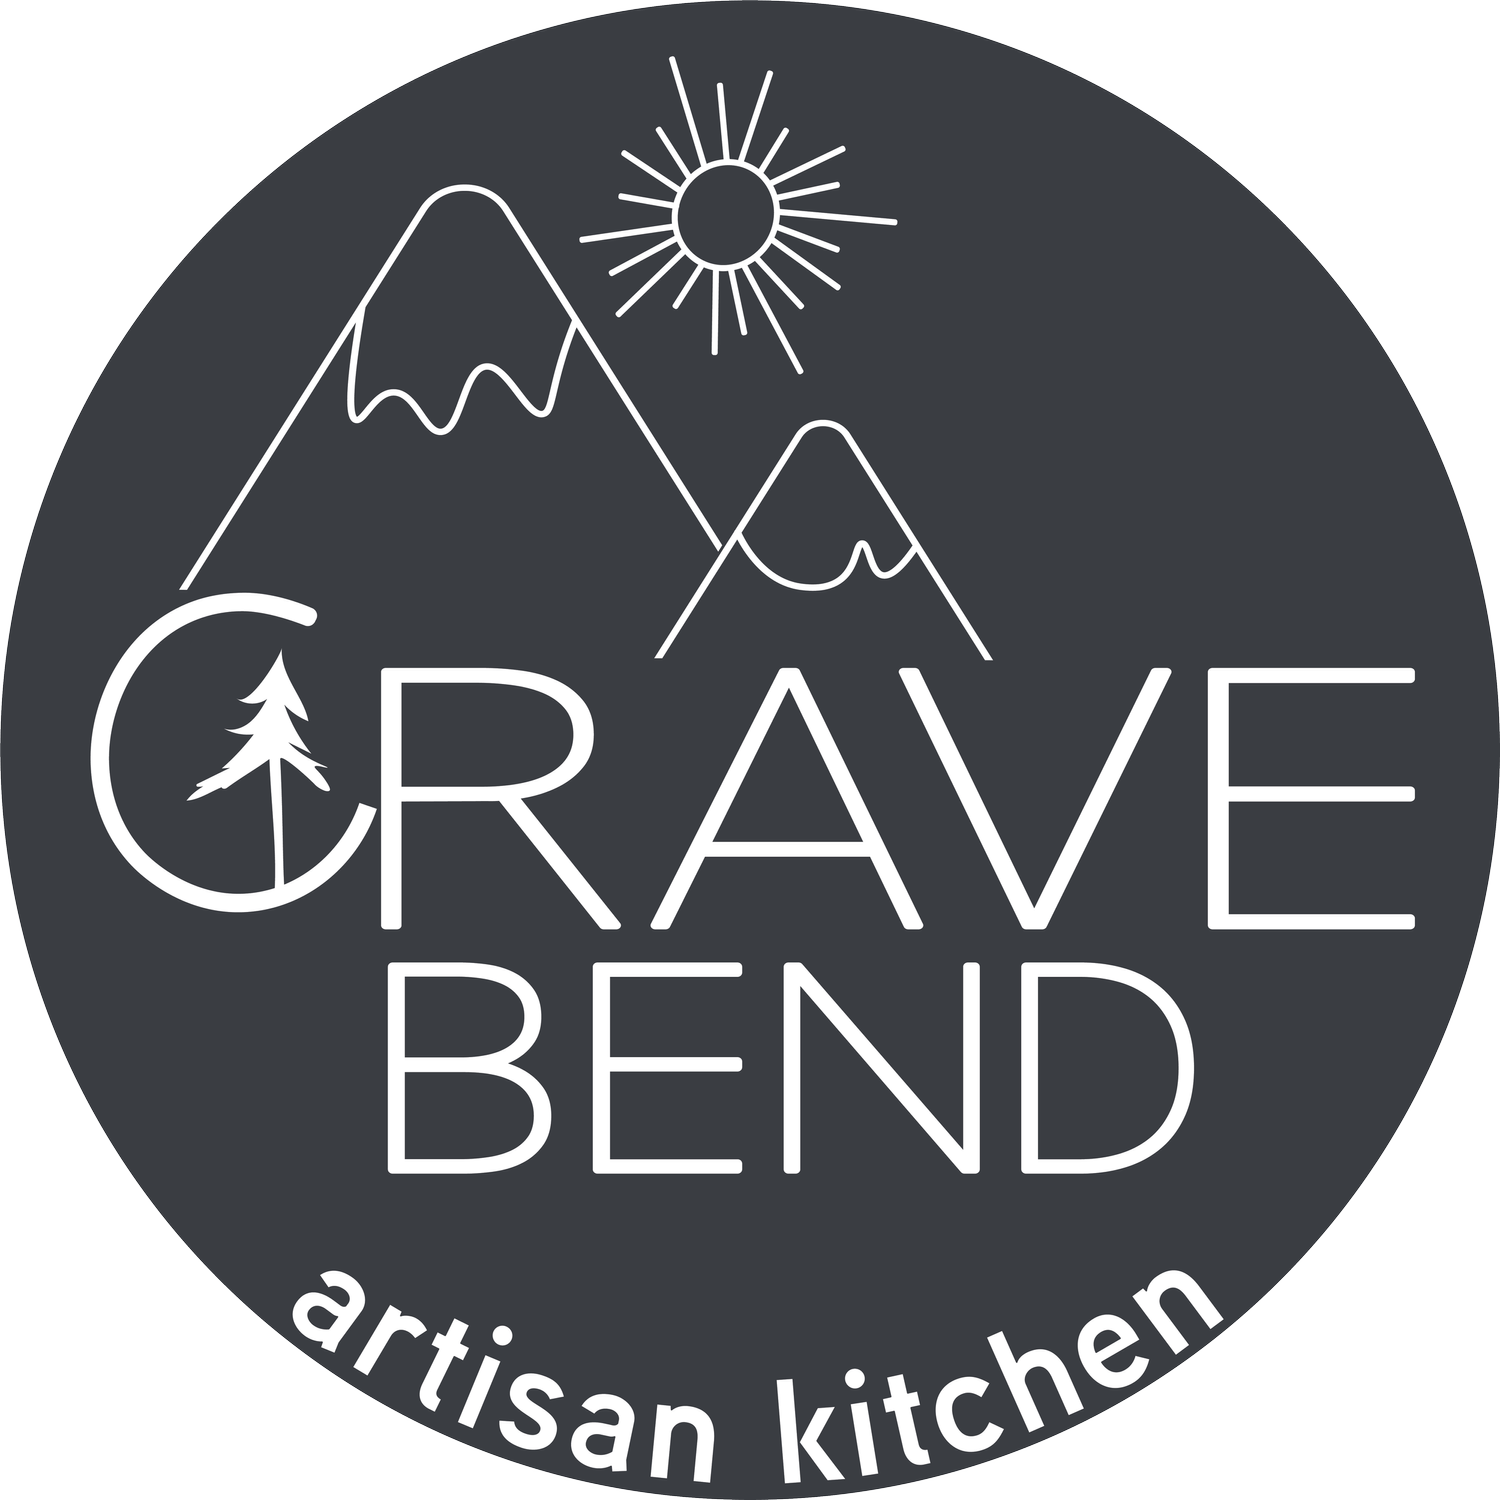 Crave Bend